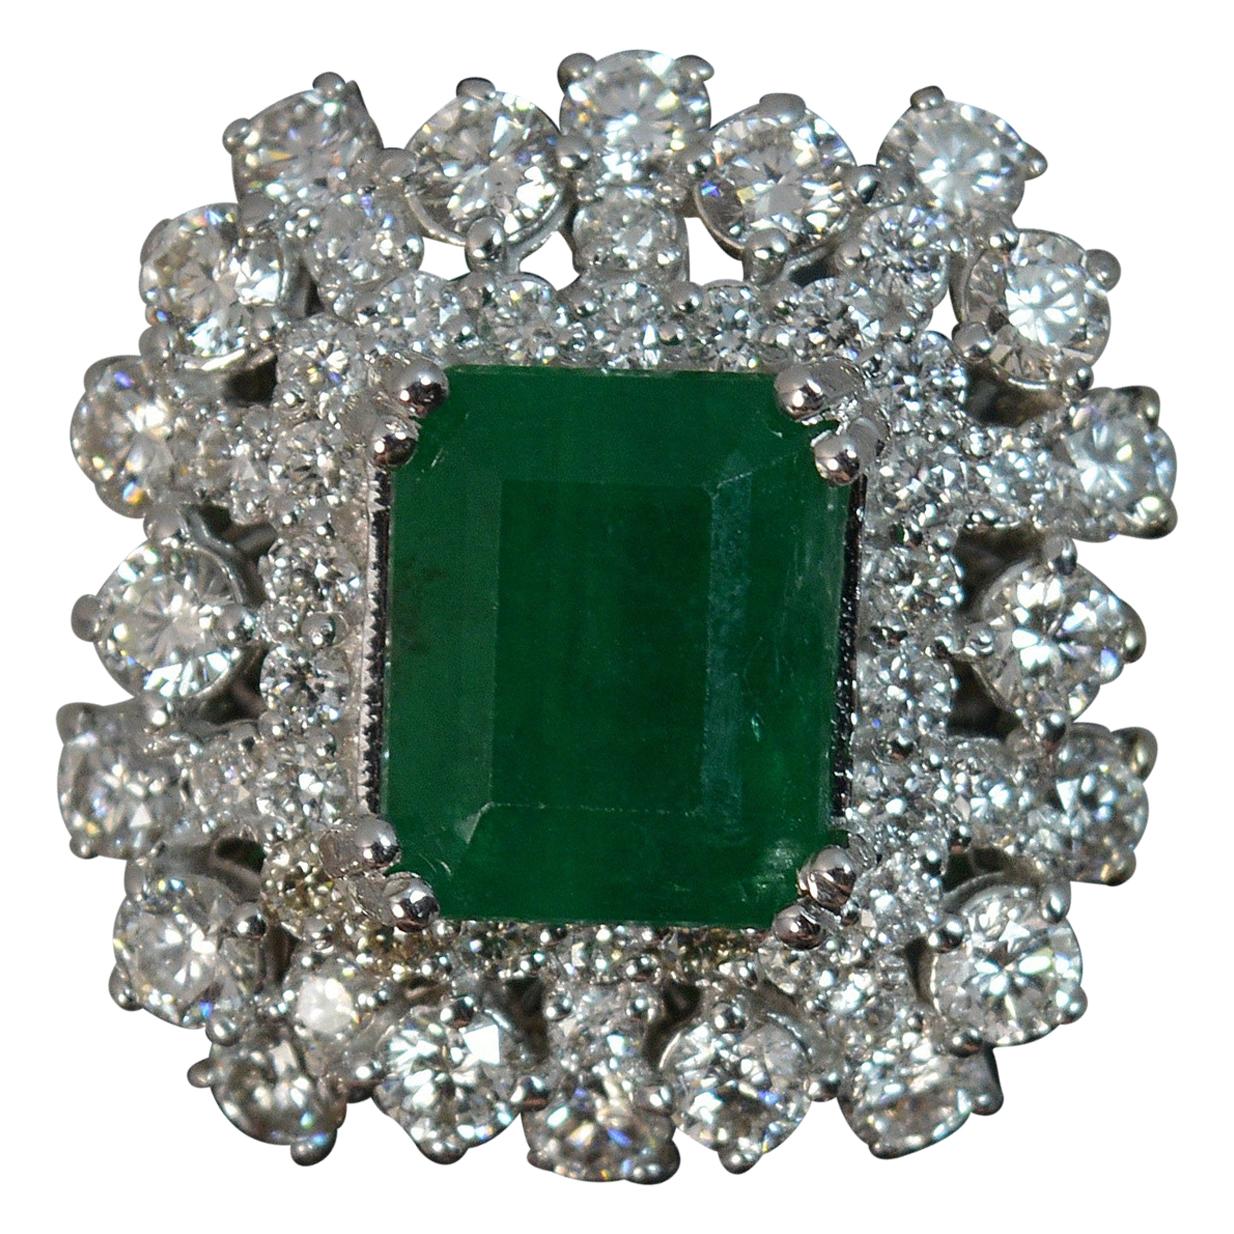 14 Carat White Gold Emerald VS1 2.25 Carat Diamond Cluster Ring